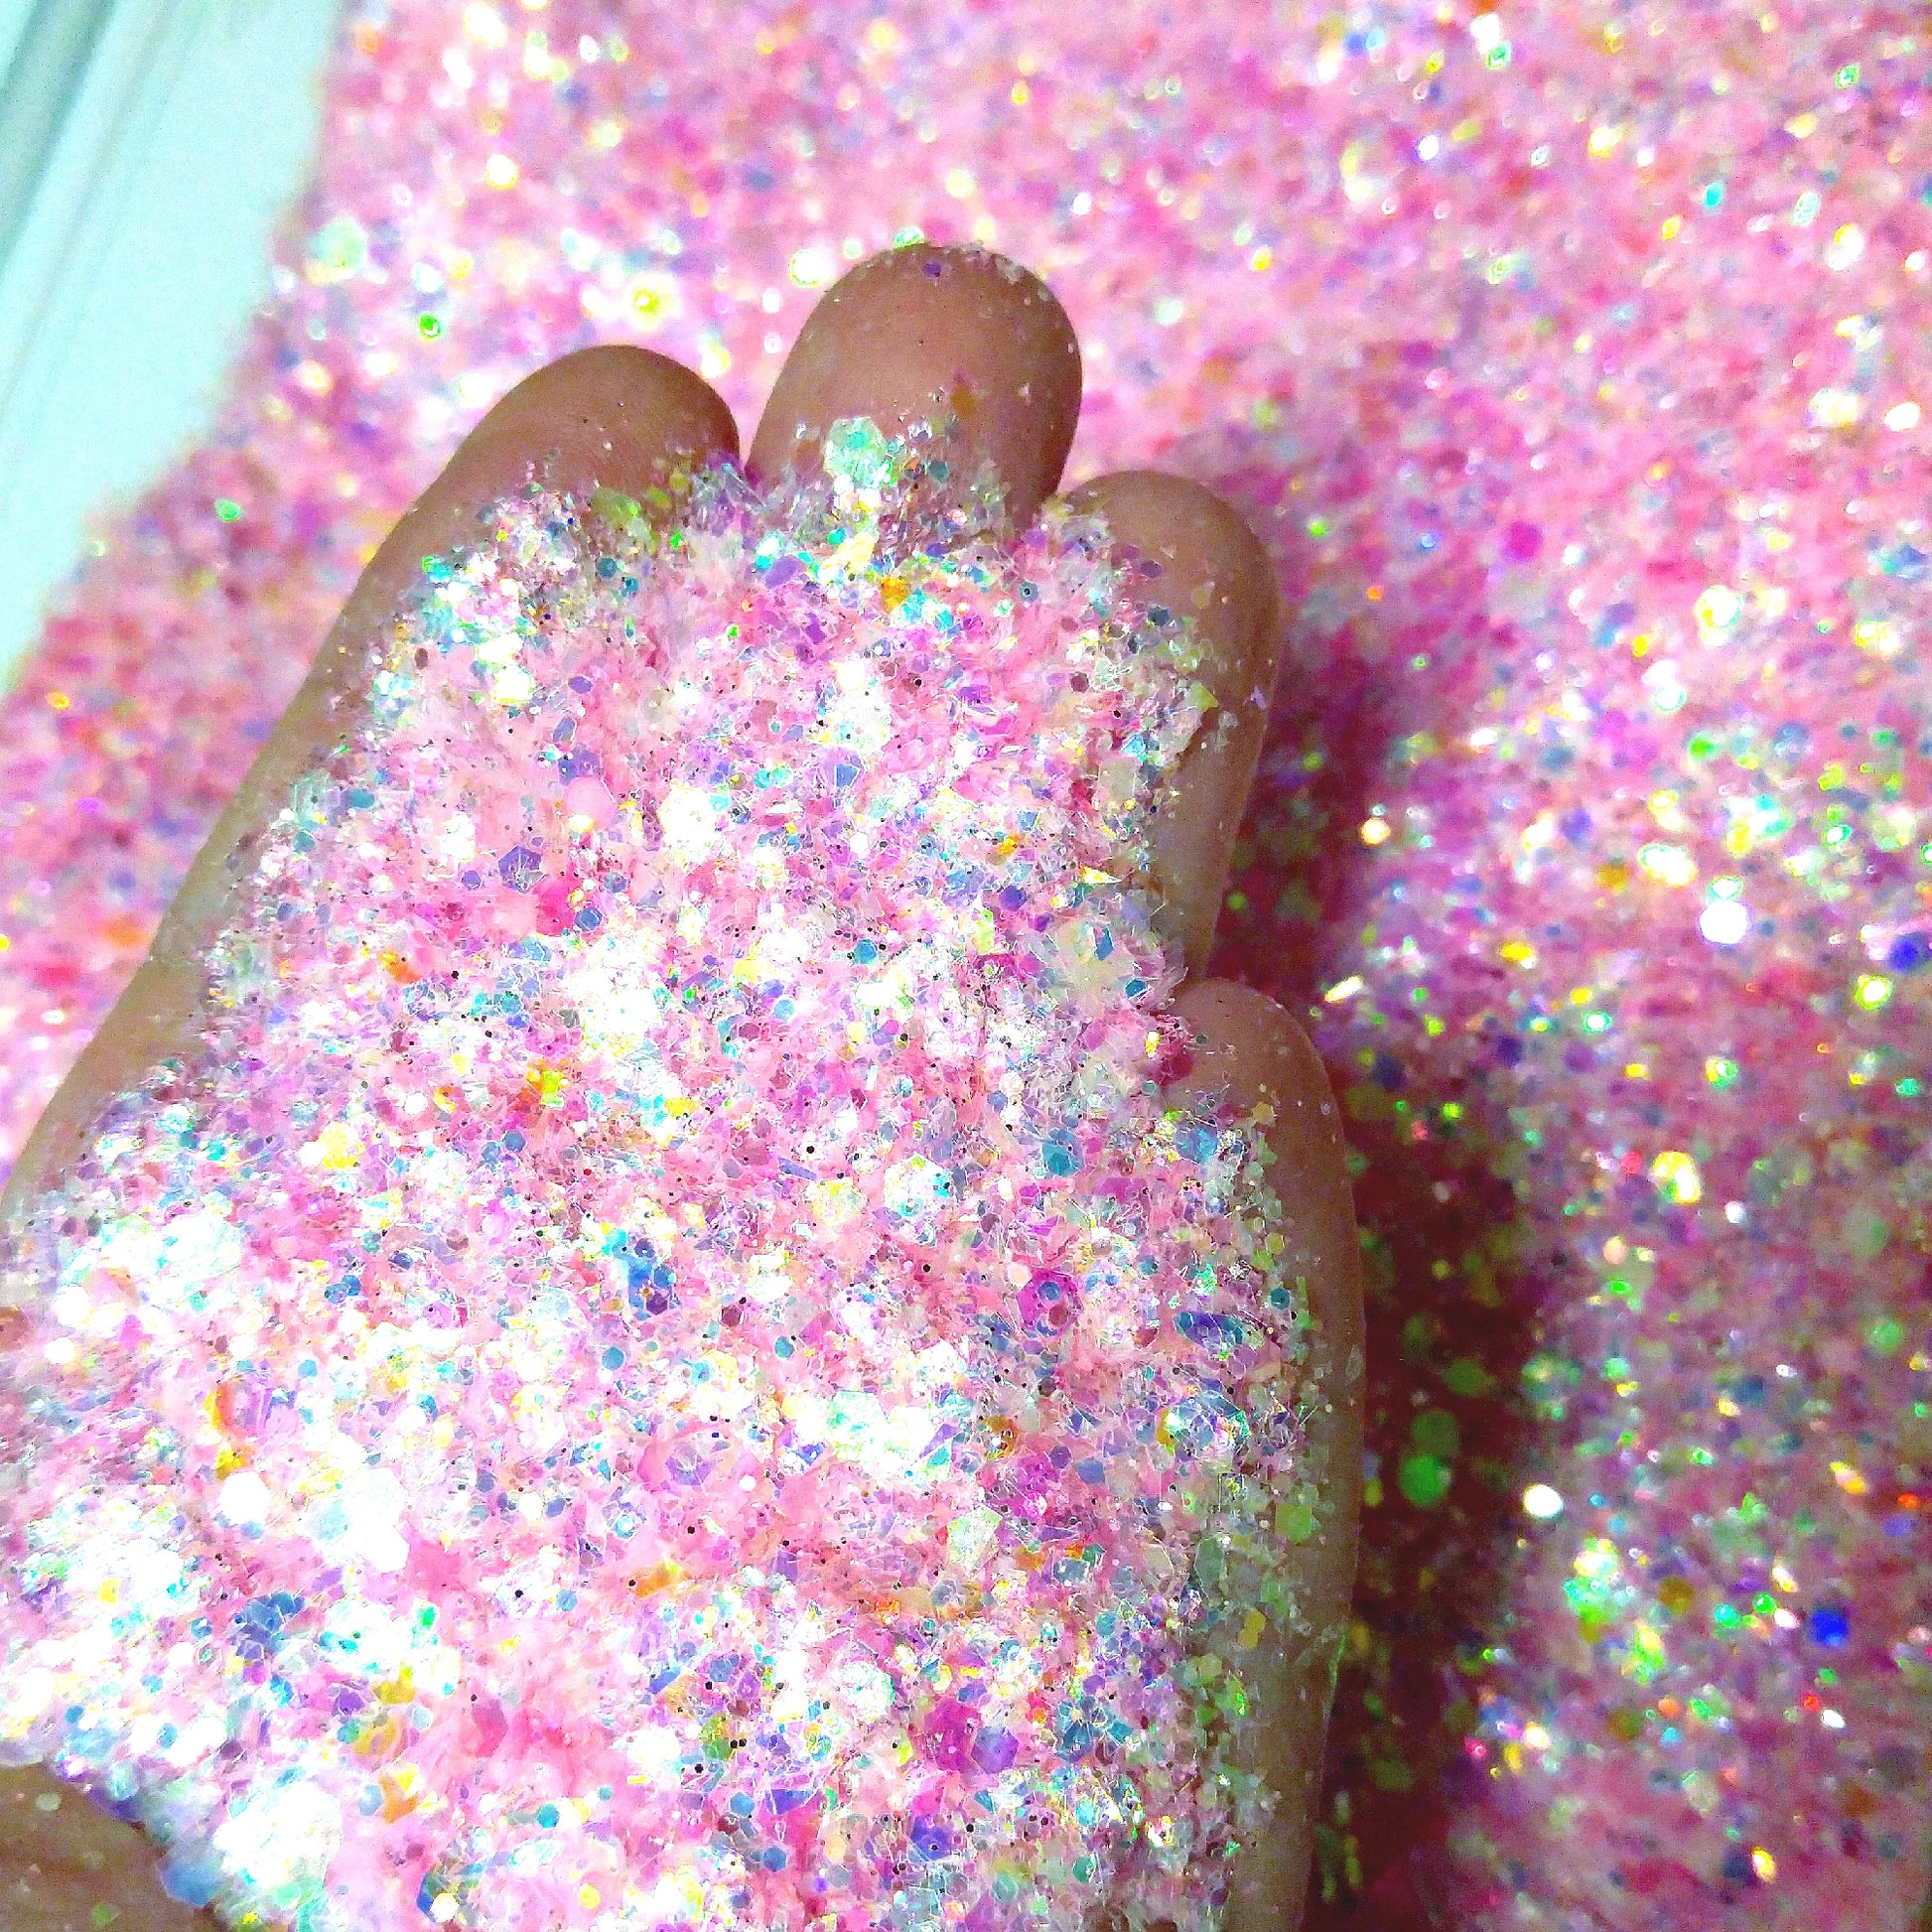 Baby Pink Iridescent Glitter Mix - Strawberry Sorbet By Crazoulis Glitter